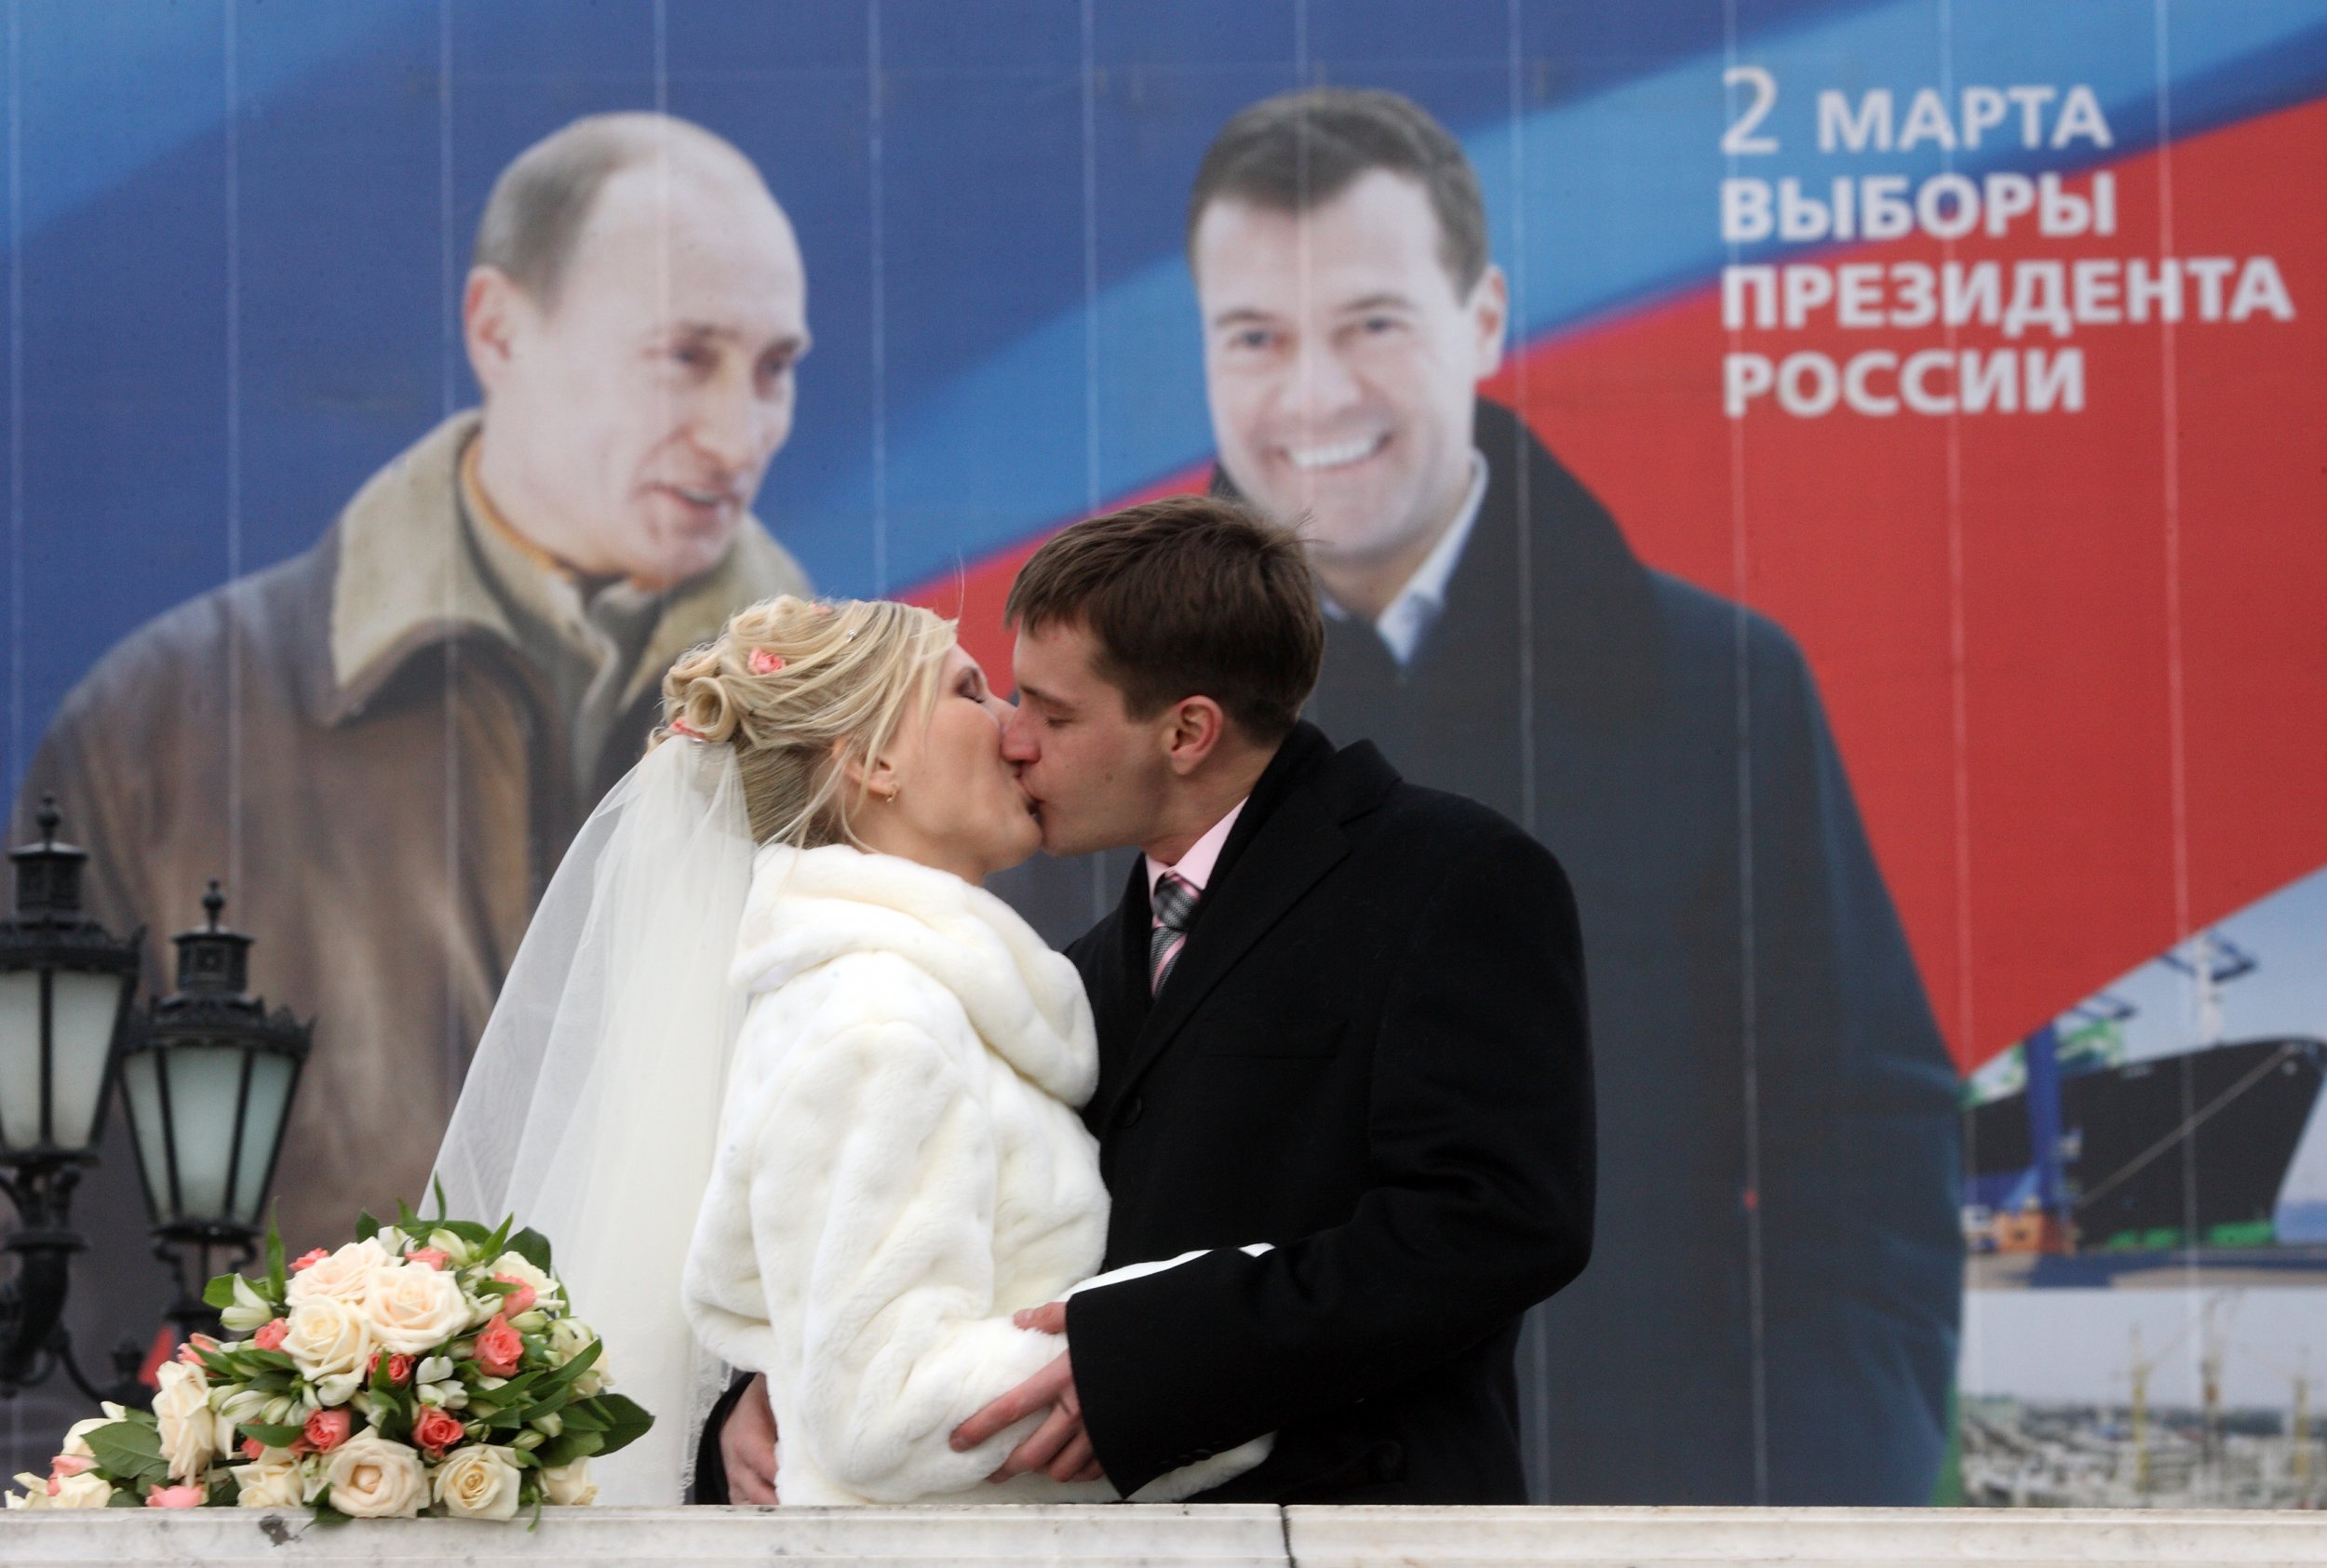 Putin kiss